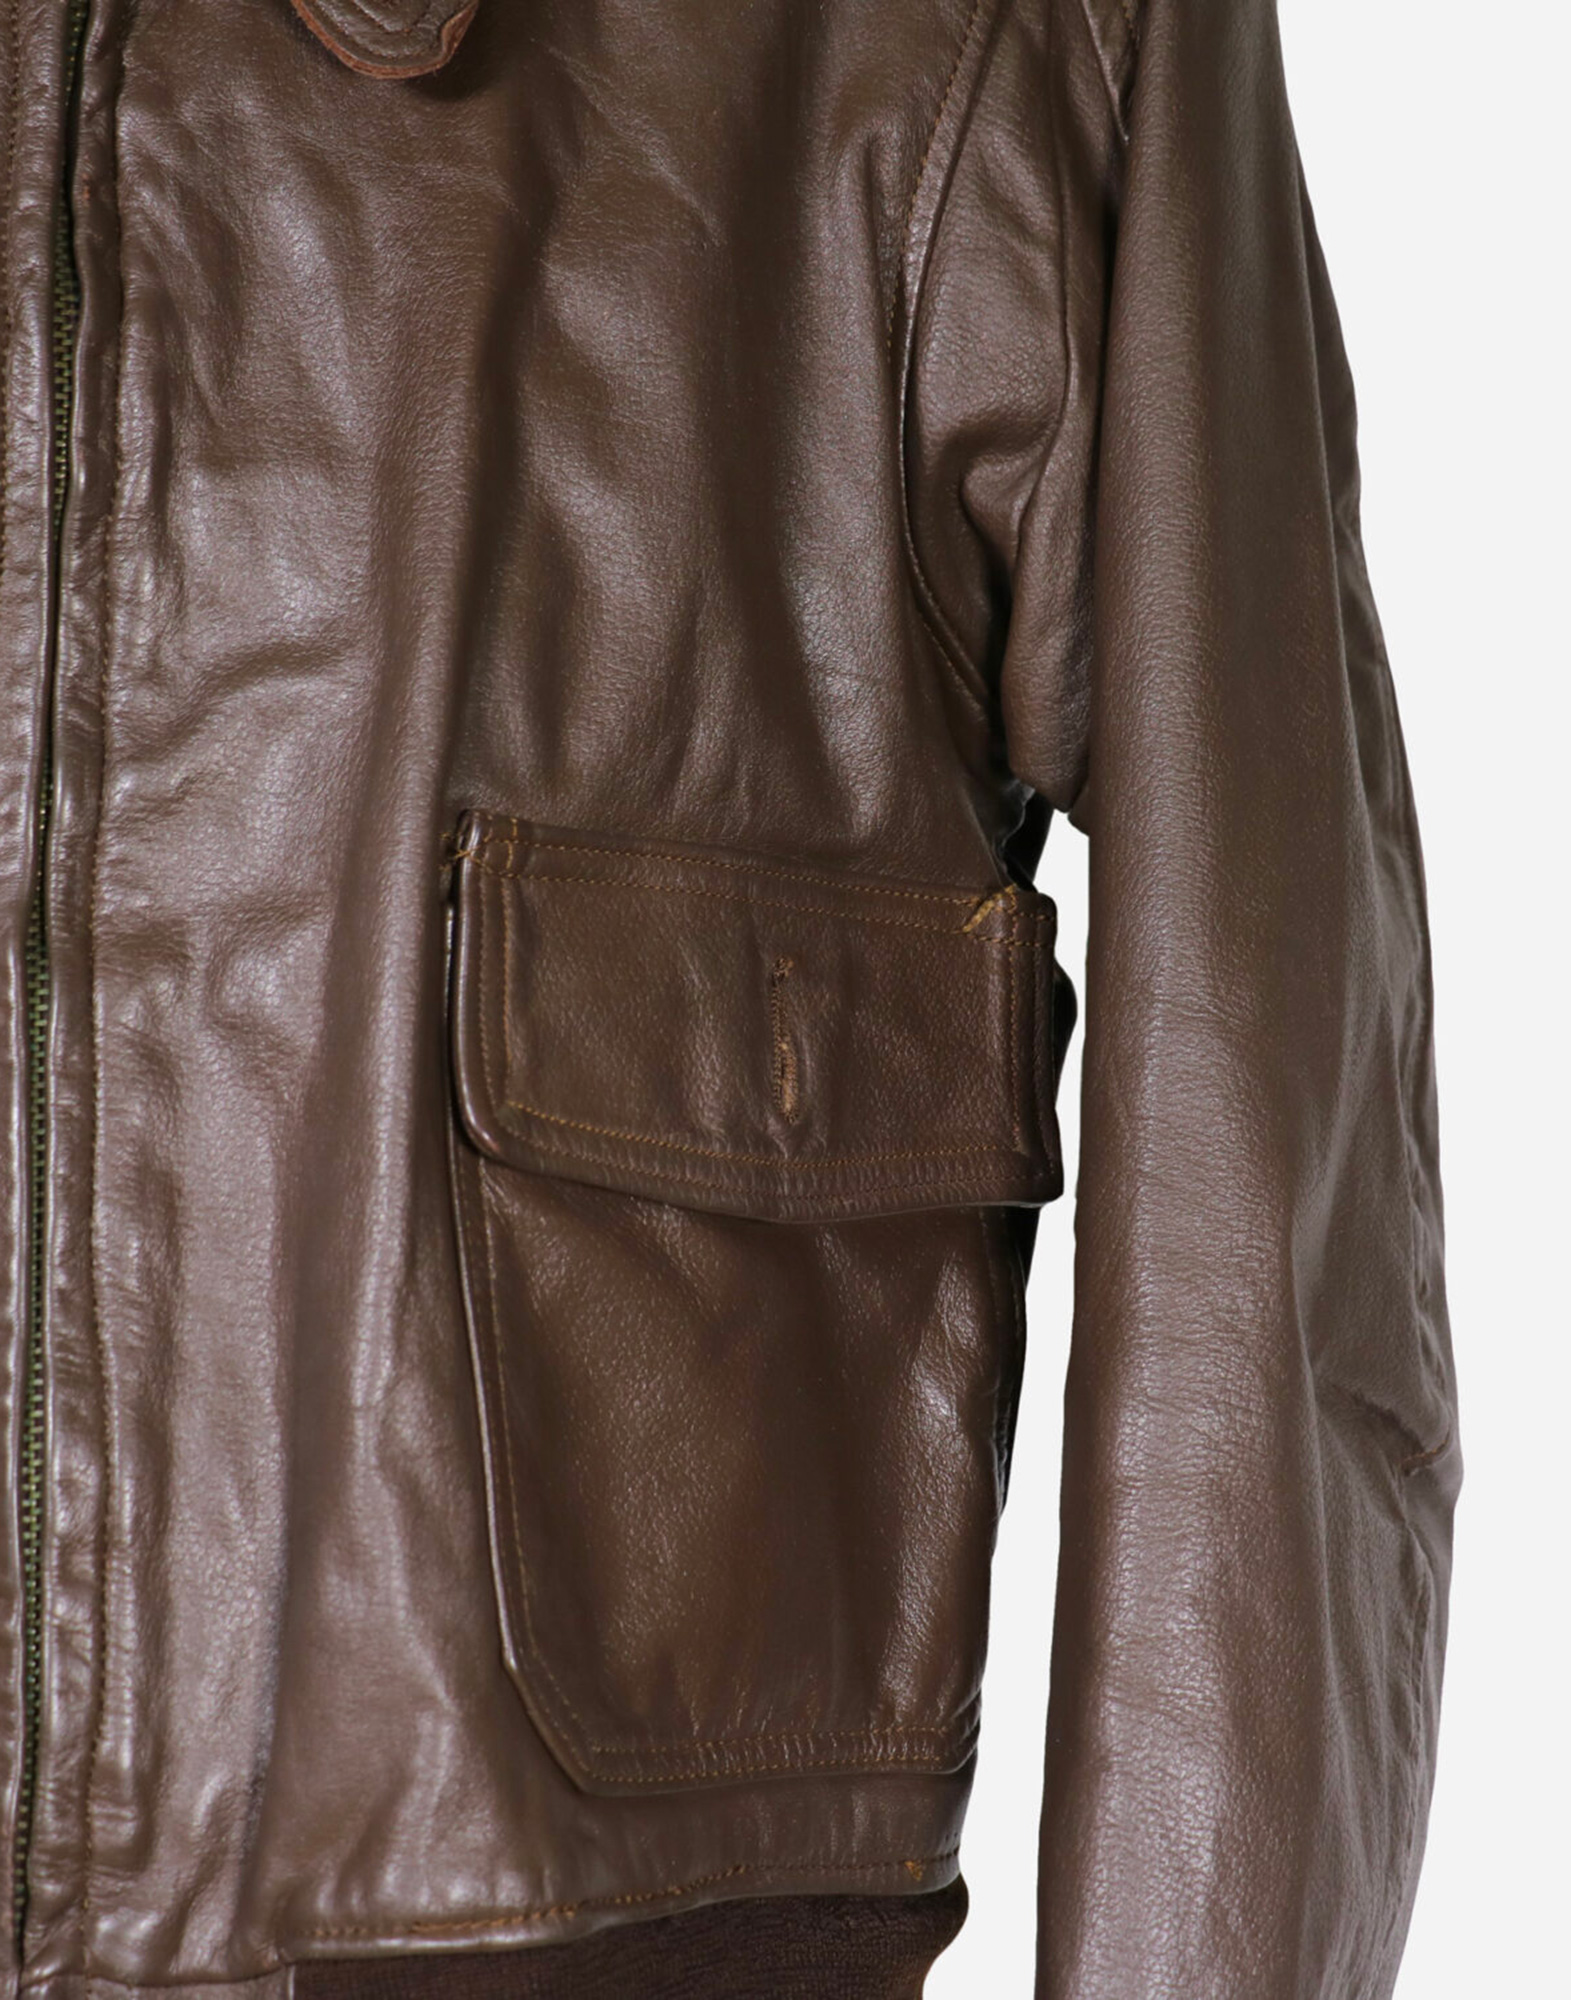 Vintage - 70s aviator style jacket